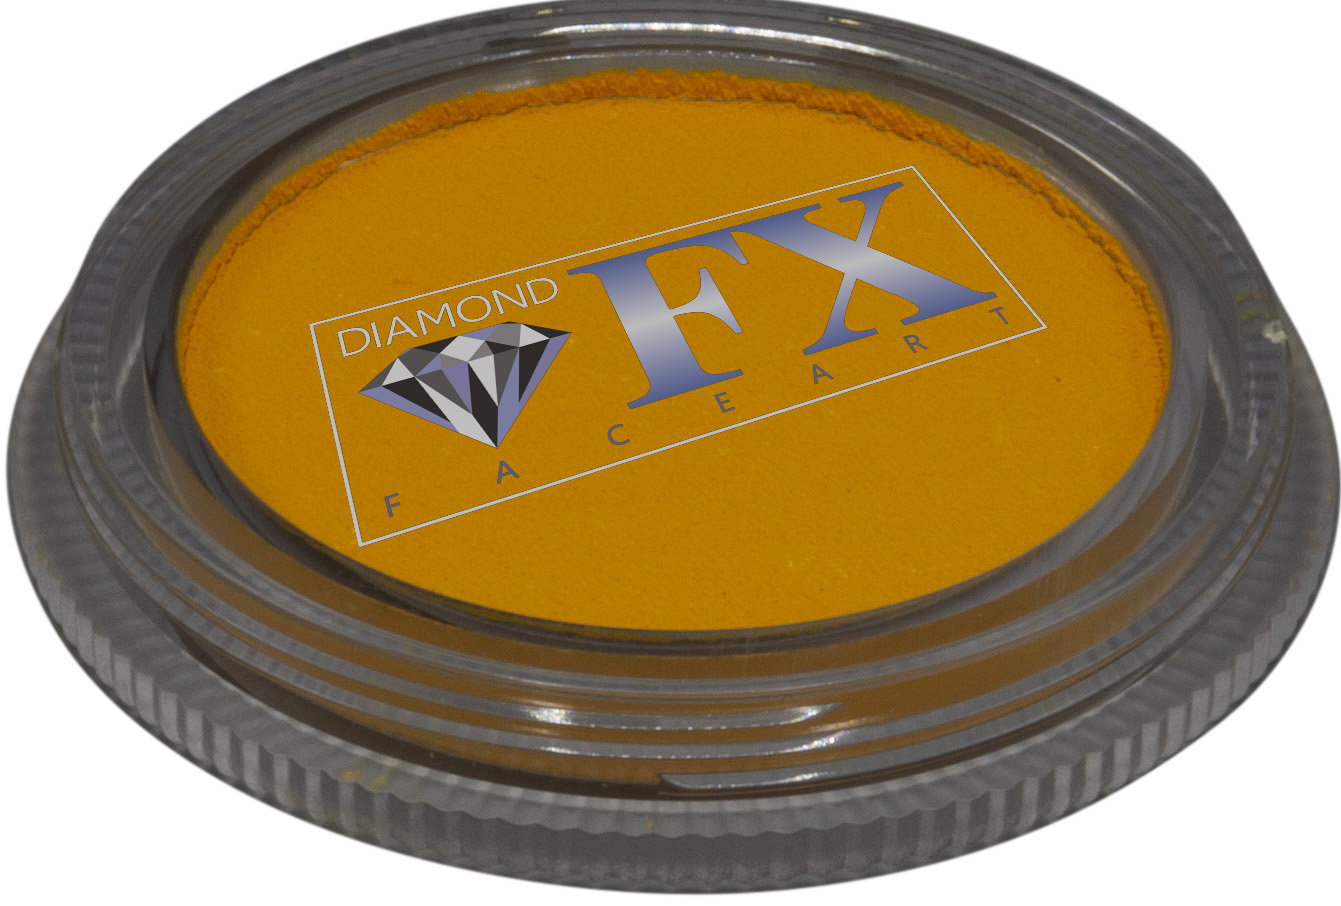 Diamond FX Yellow/Orange 30g - Small Image